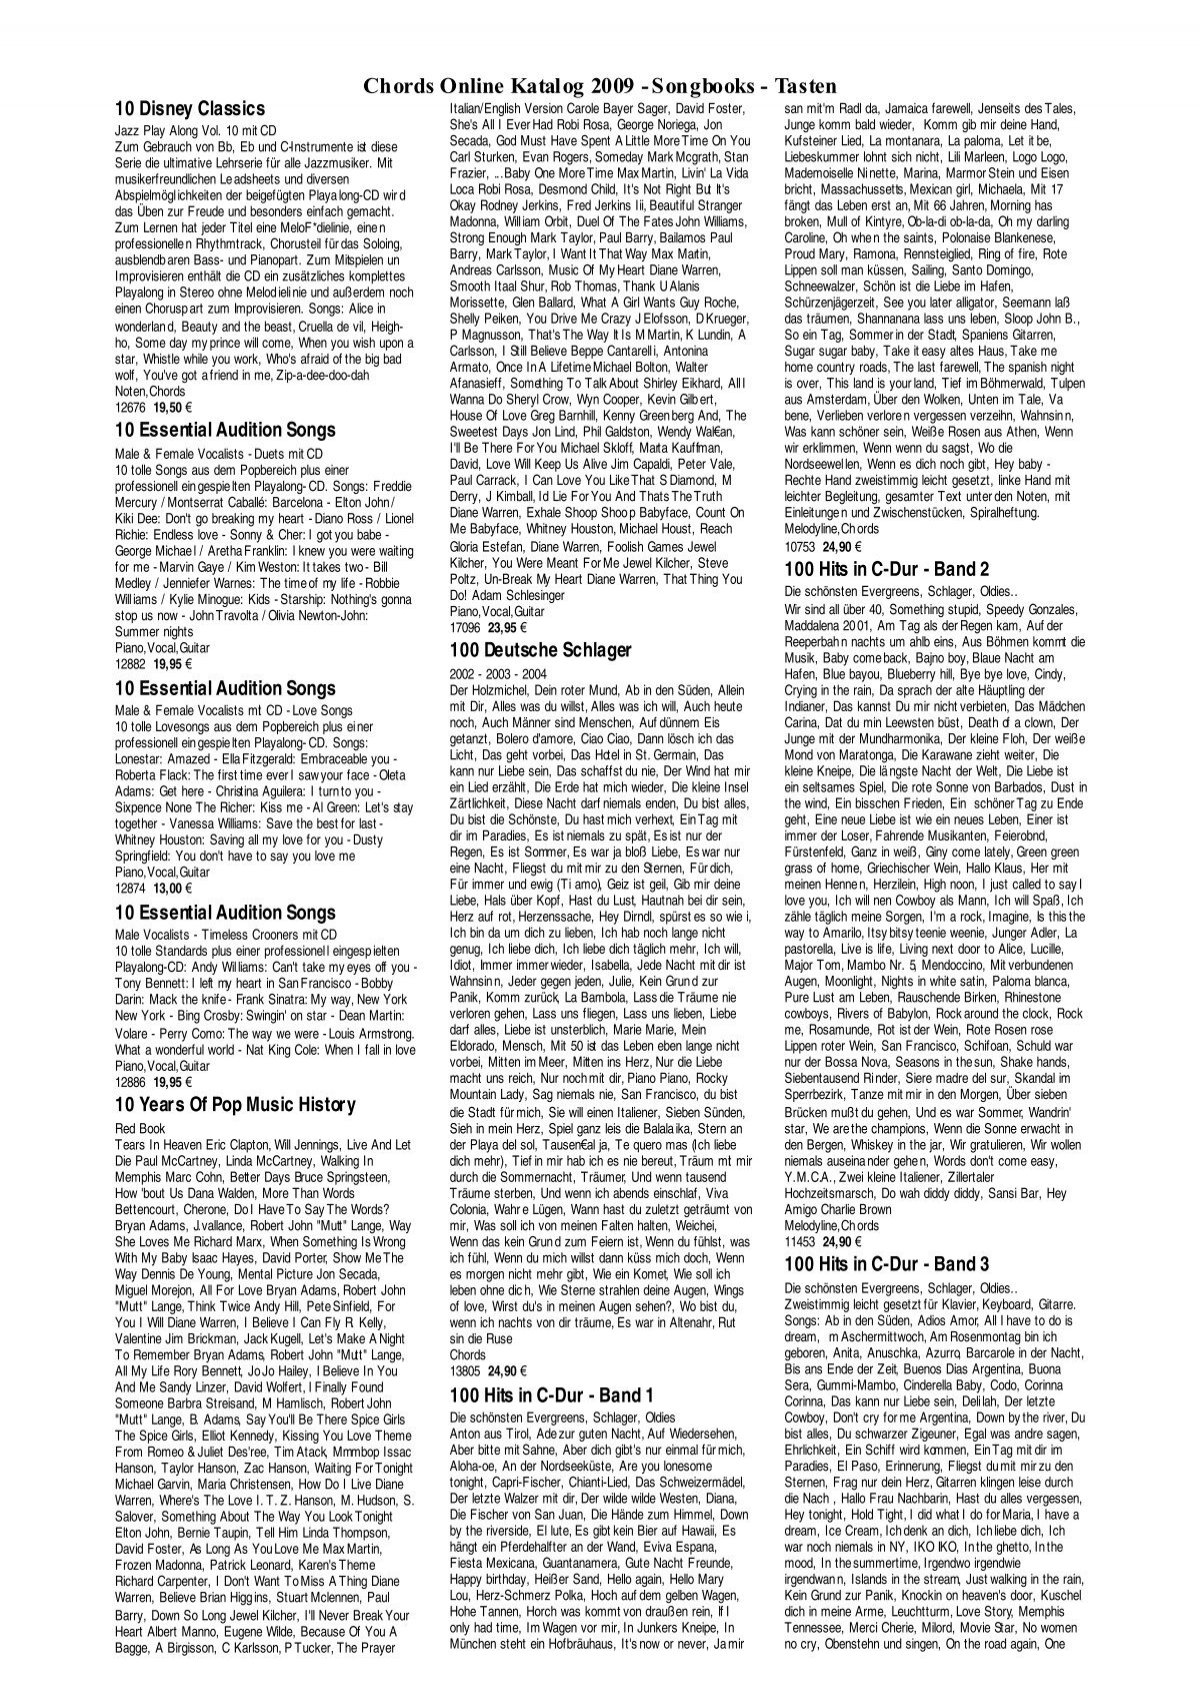 Vento Dolce Di Natale Karaoke.Chords Online Katalog 2009 Songbooks Tasten